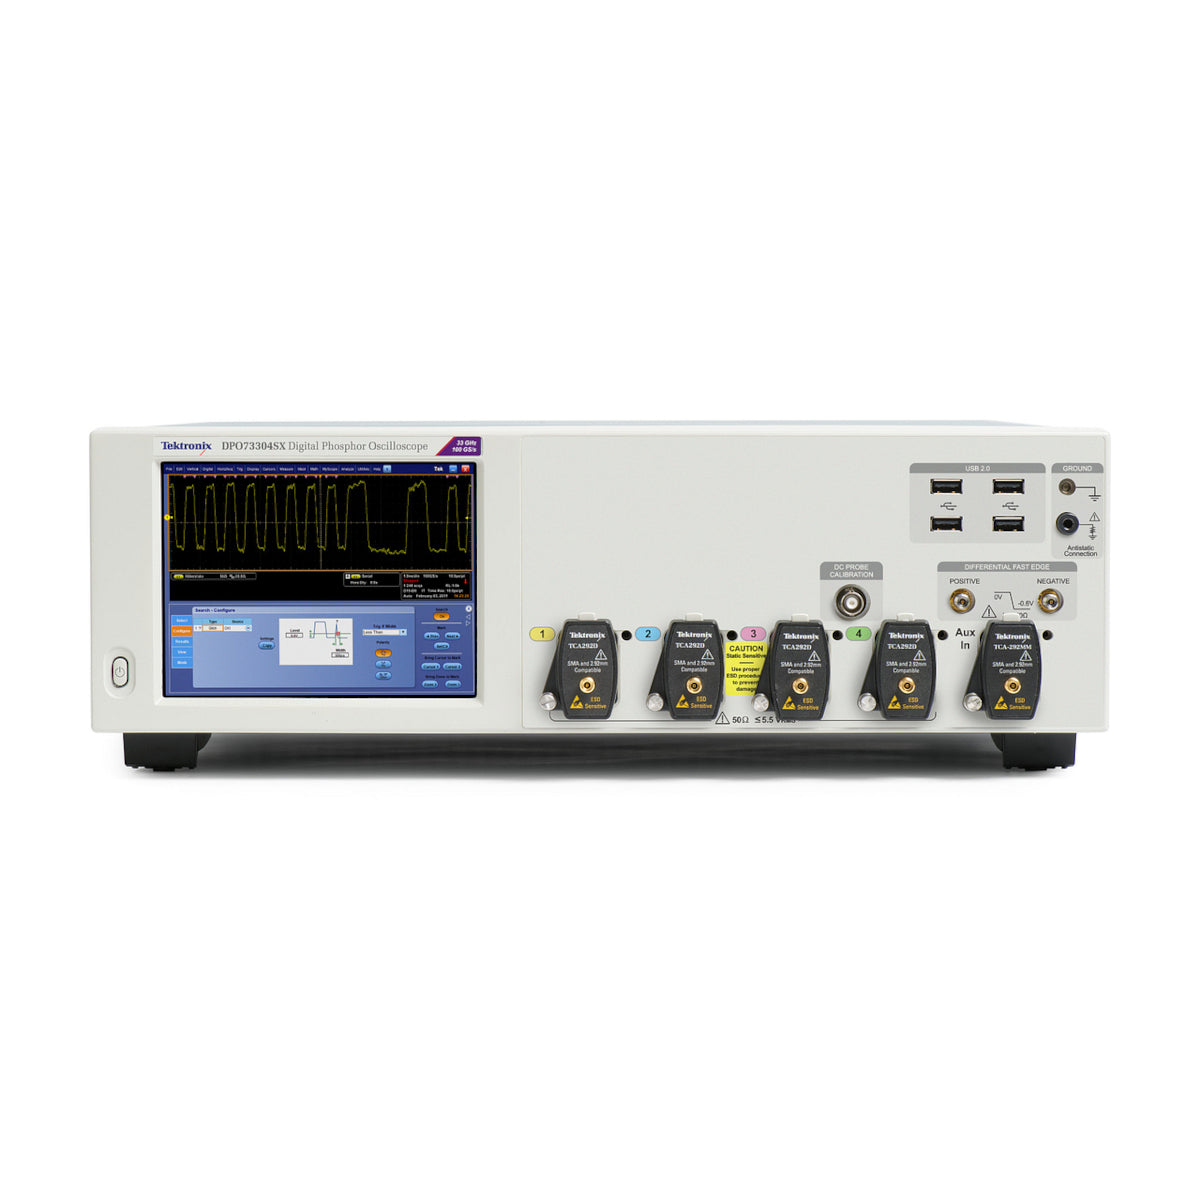 Tektronix DPO77002SX Scalable Performance Oscilloscope